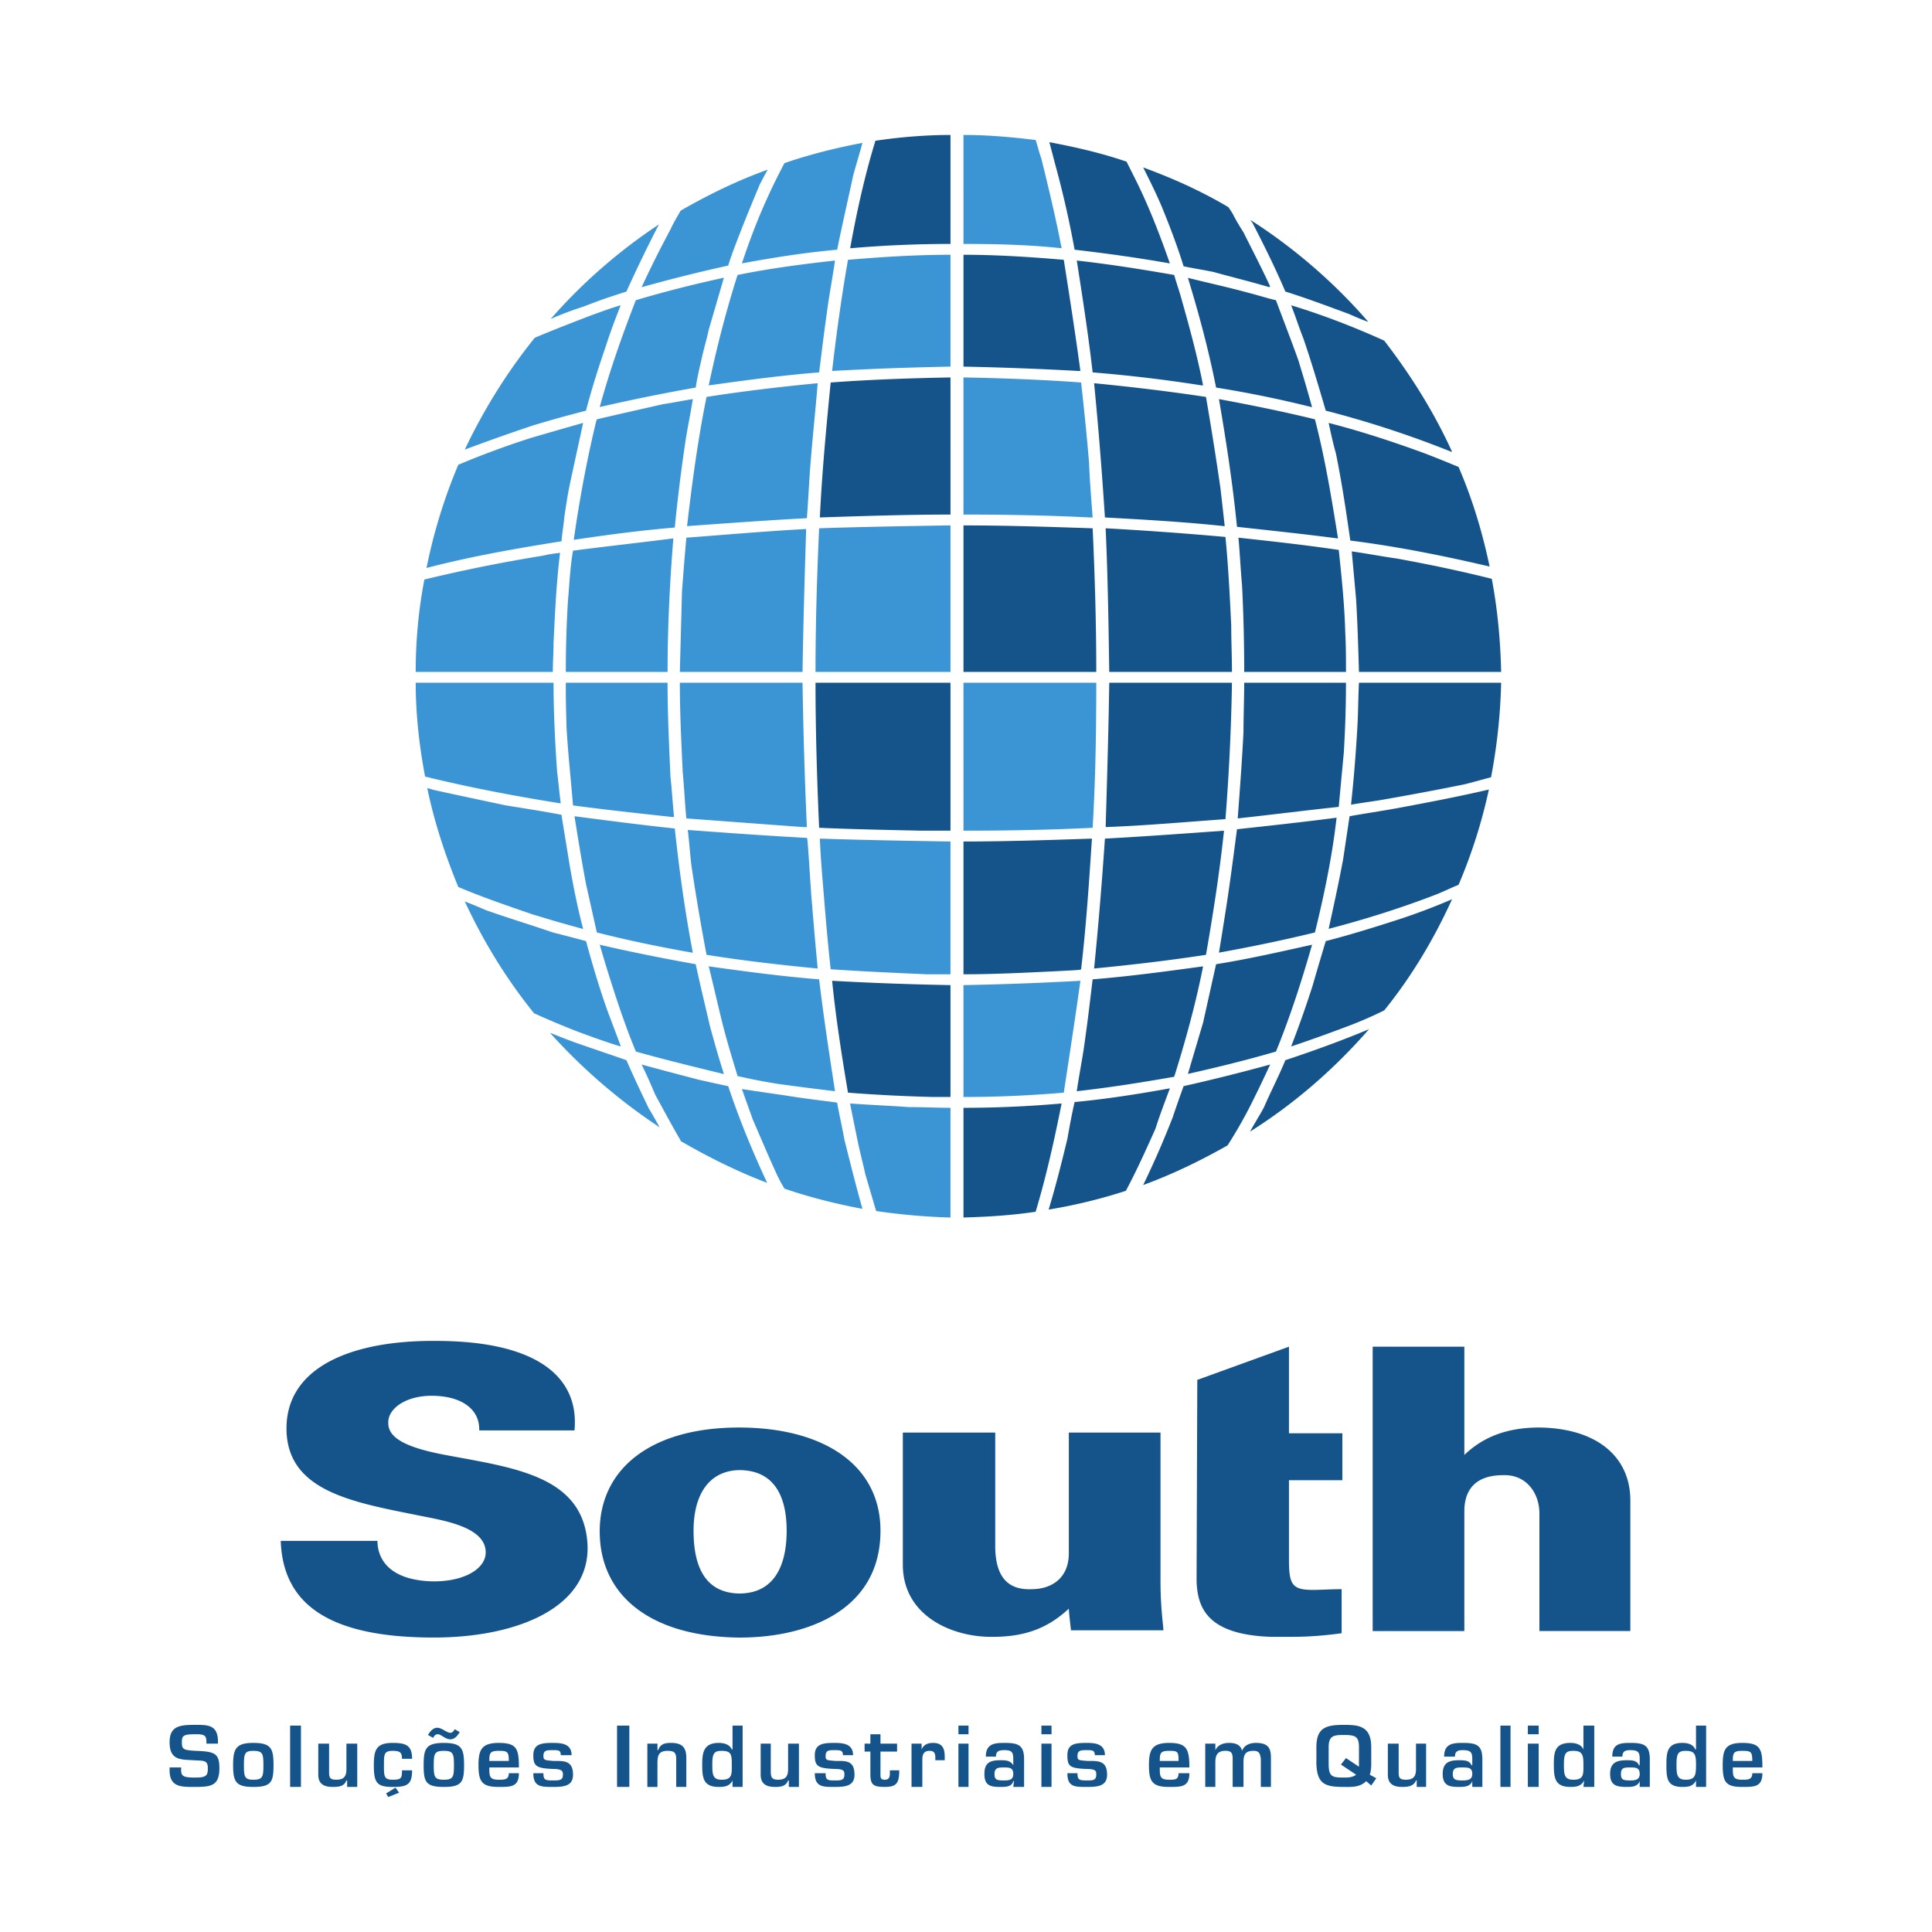 South American Football Confederation (CONMEBOL) logo colors